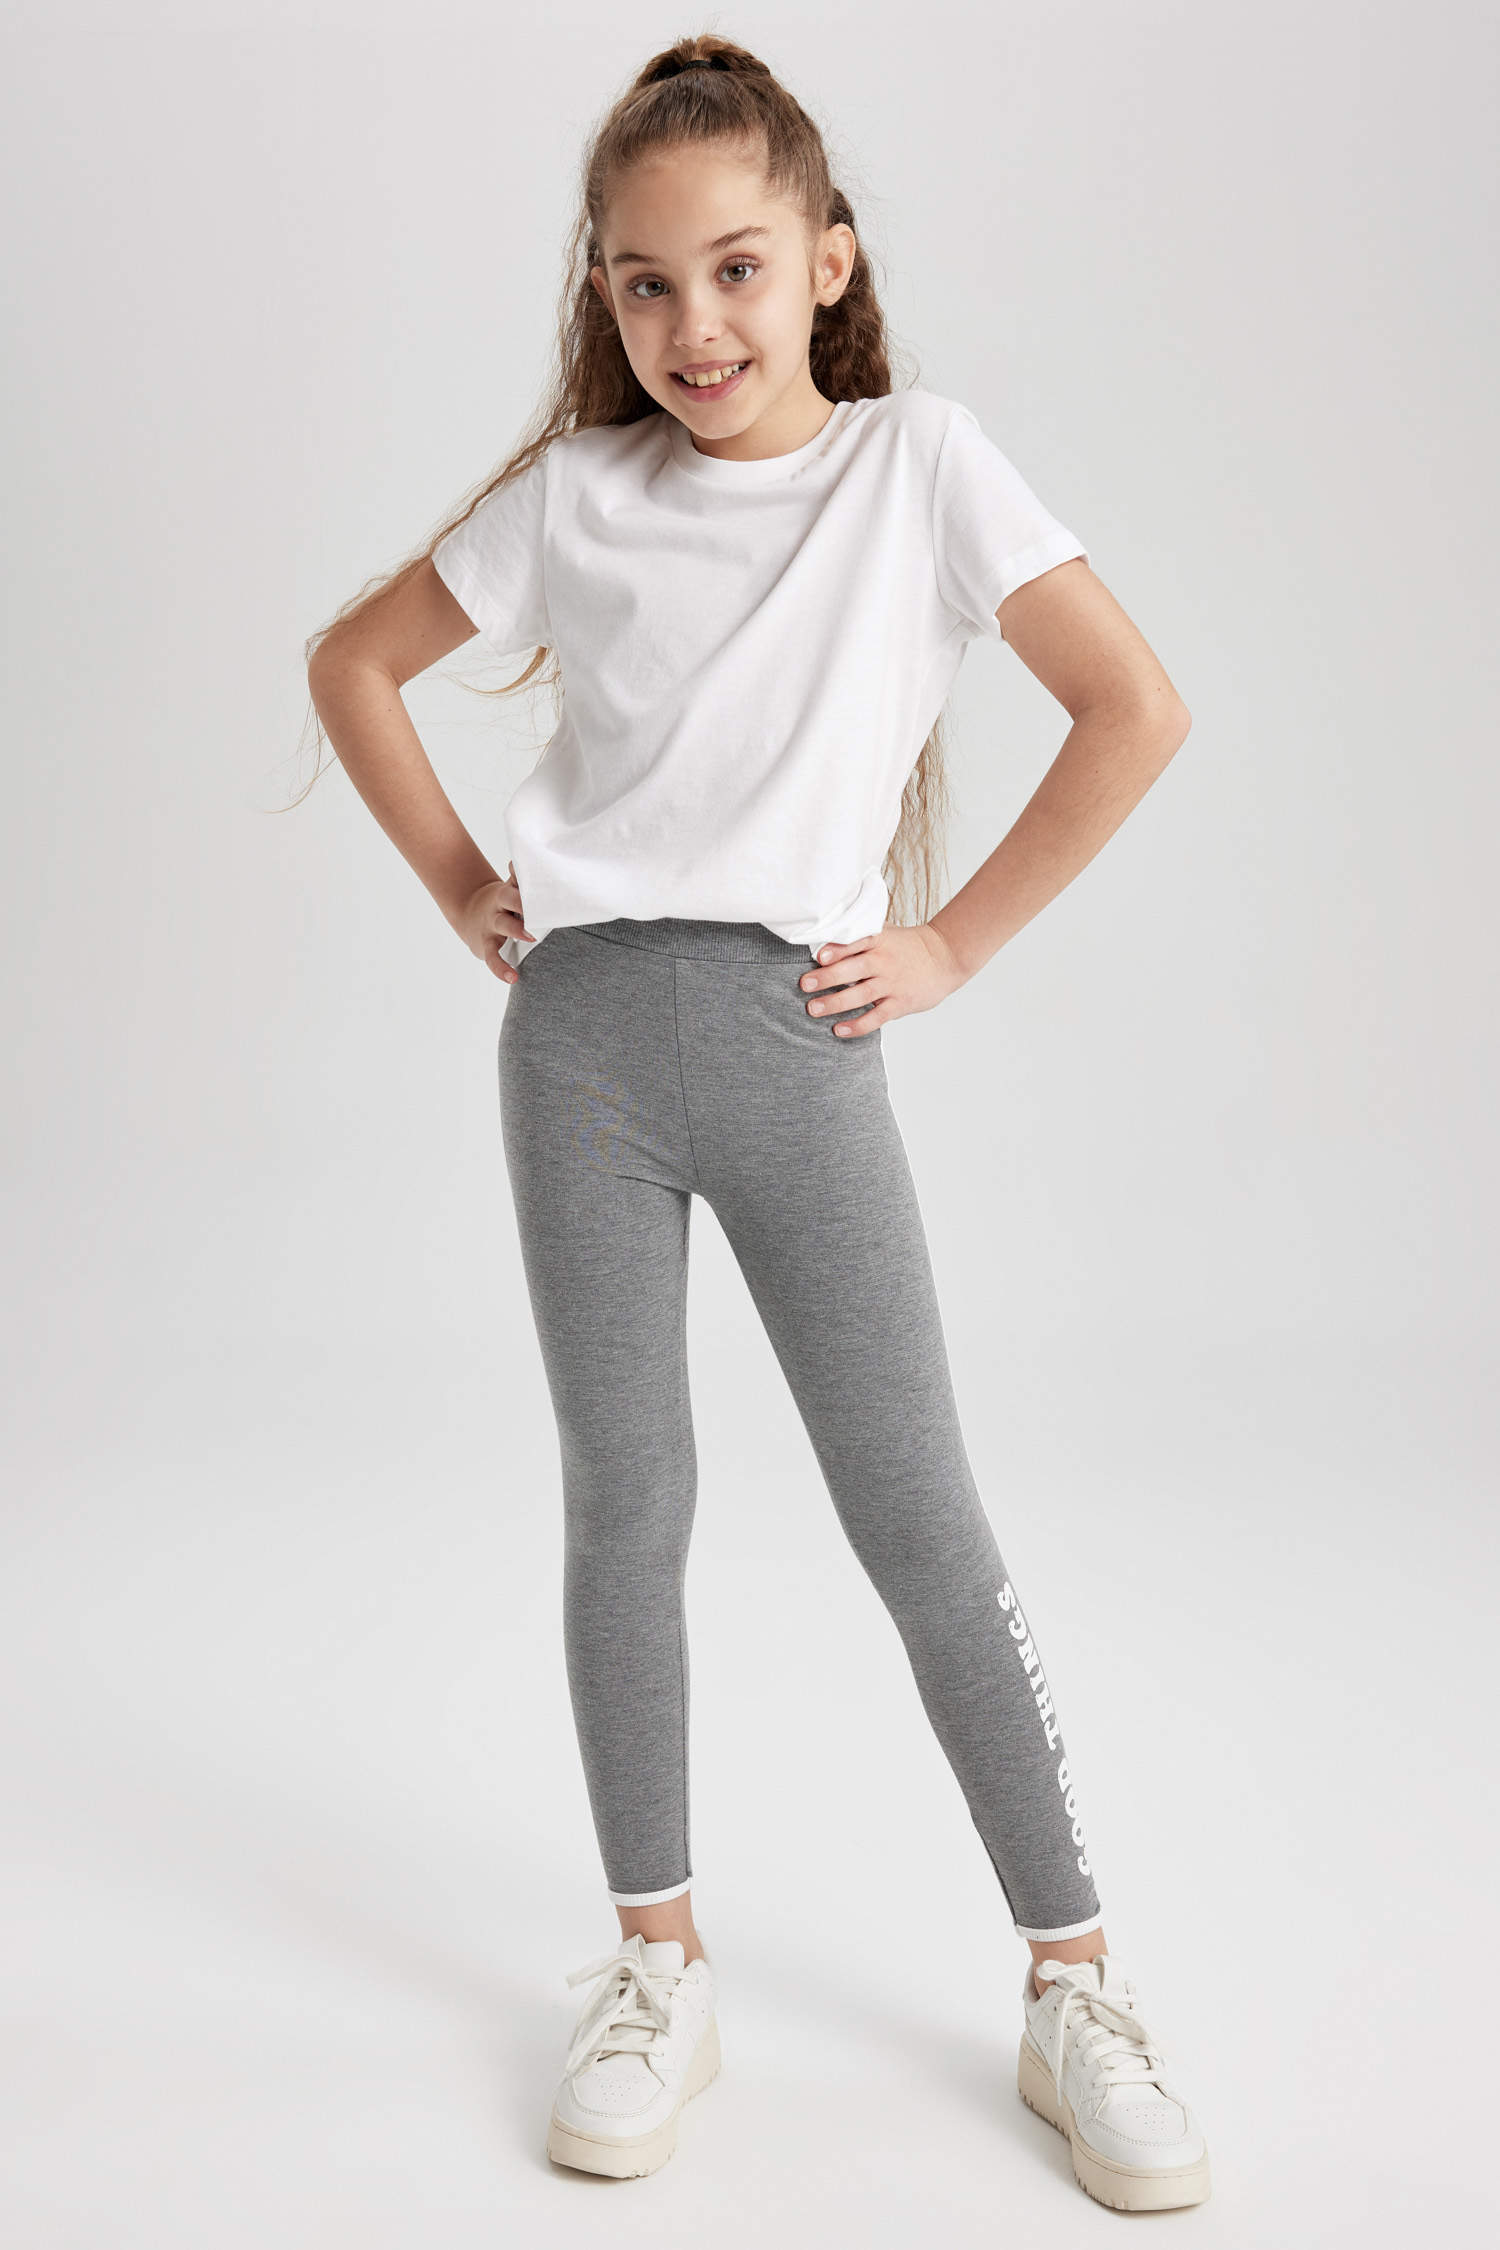 Buy hi!mom Kids Cotton Leggings Girls Pants Plain Full Length Childrens  Trousers Age 2-13 at Amazon.in